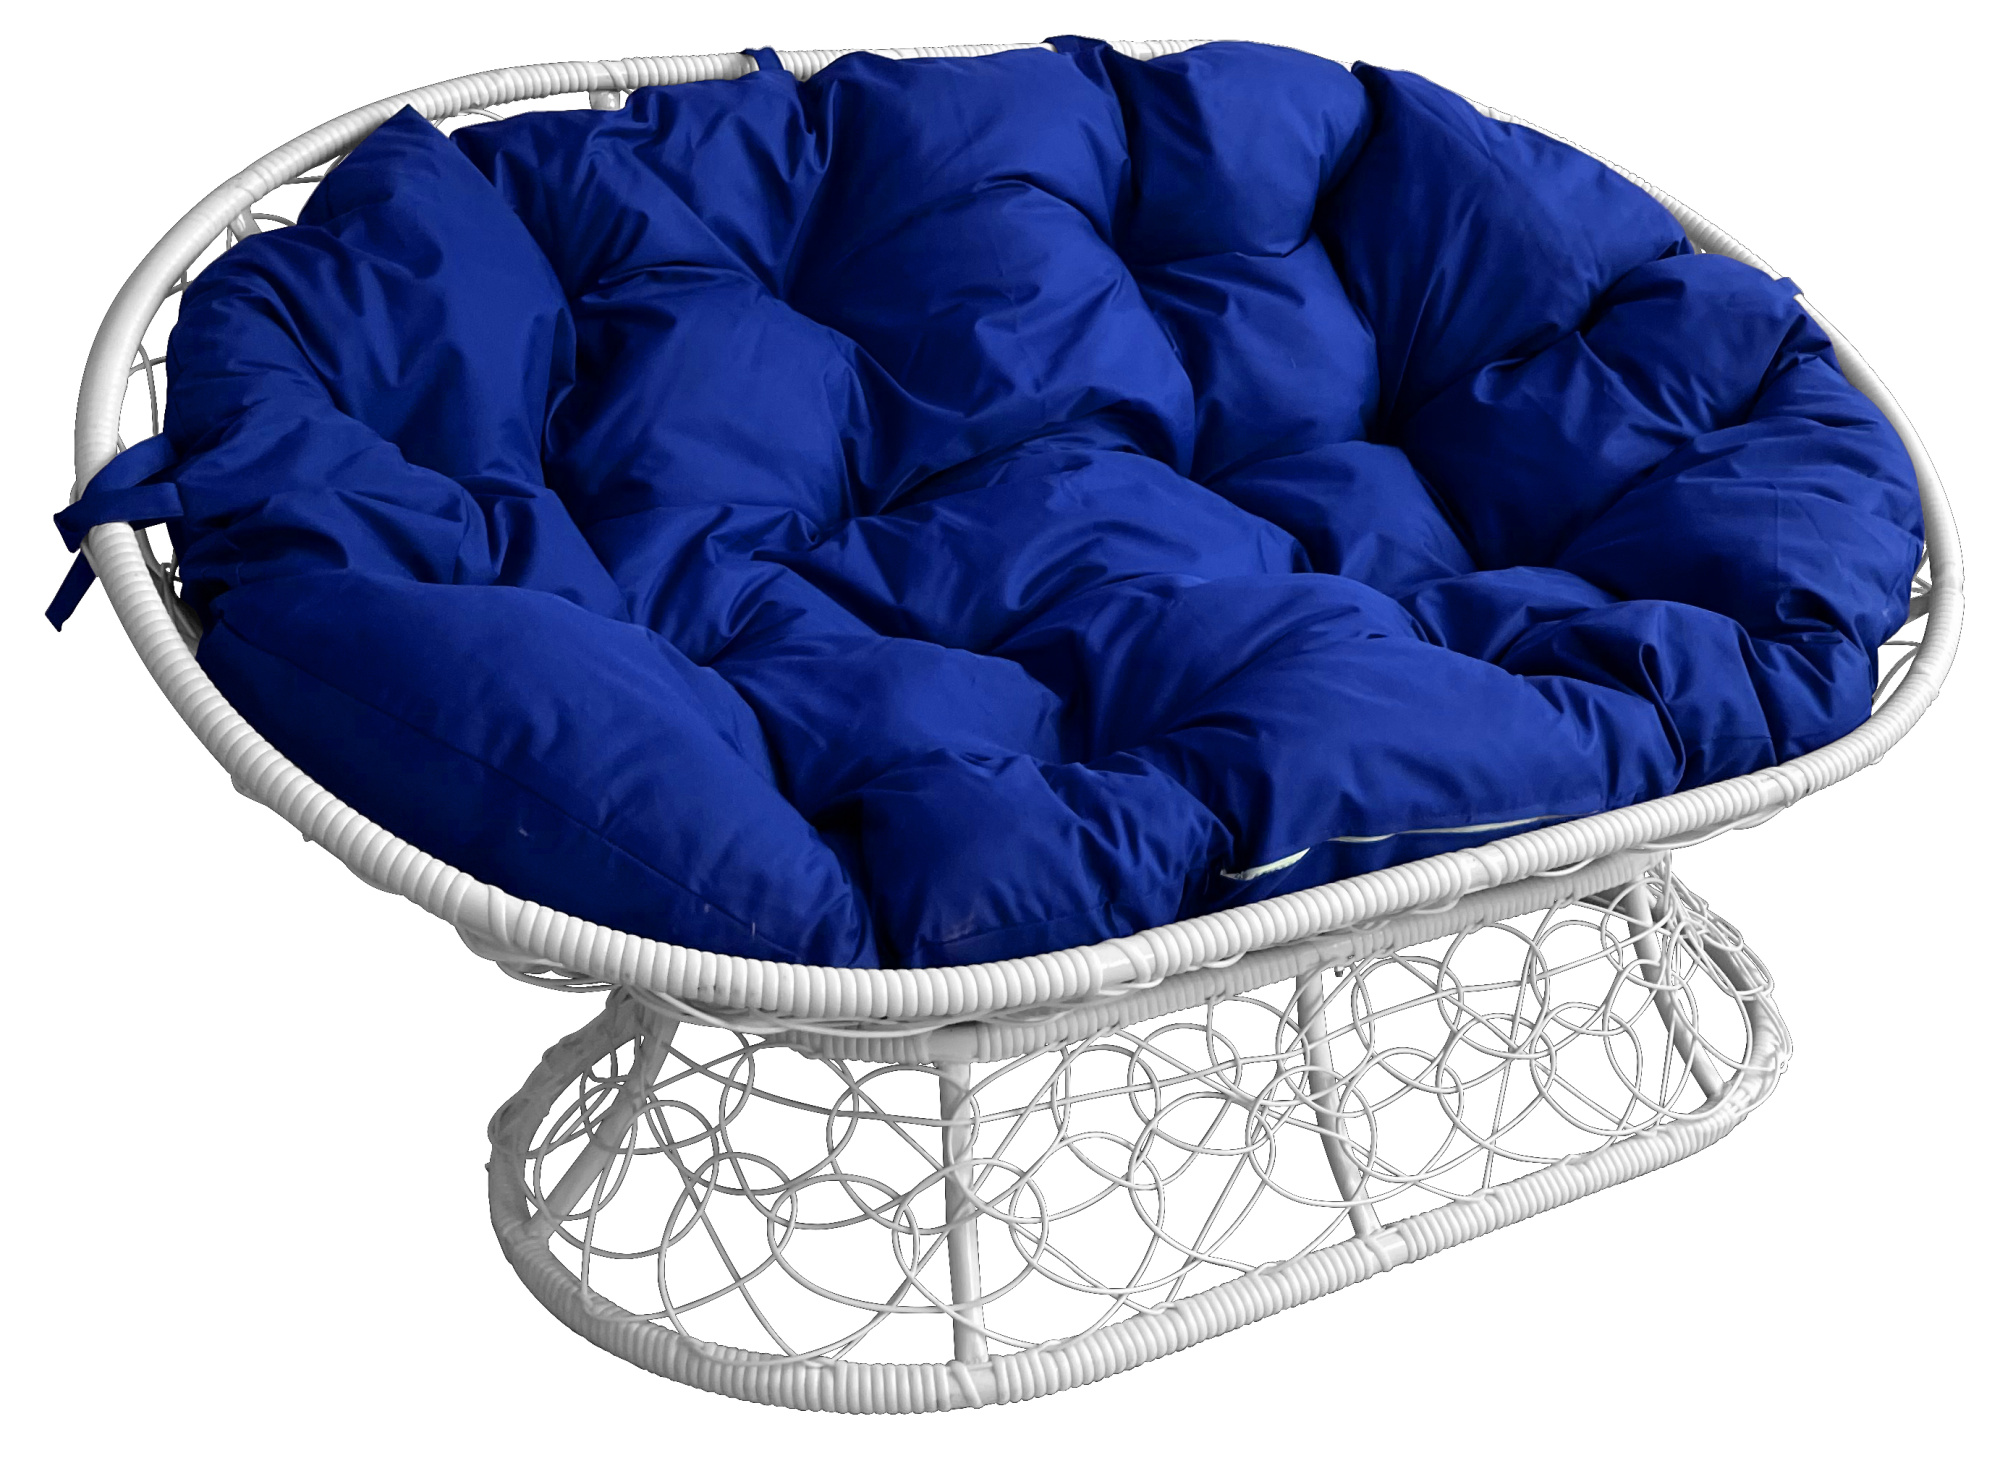 Диван садовый M-Group Мамасан белый ротанг 12110110 синяя подушка